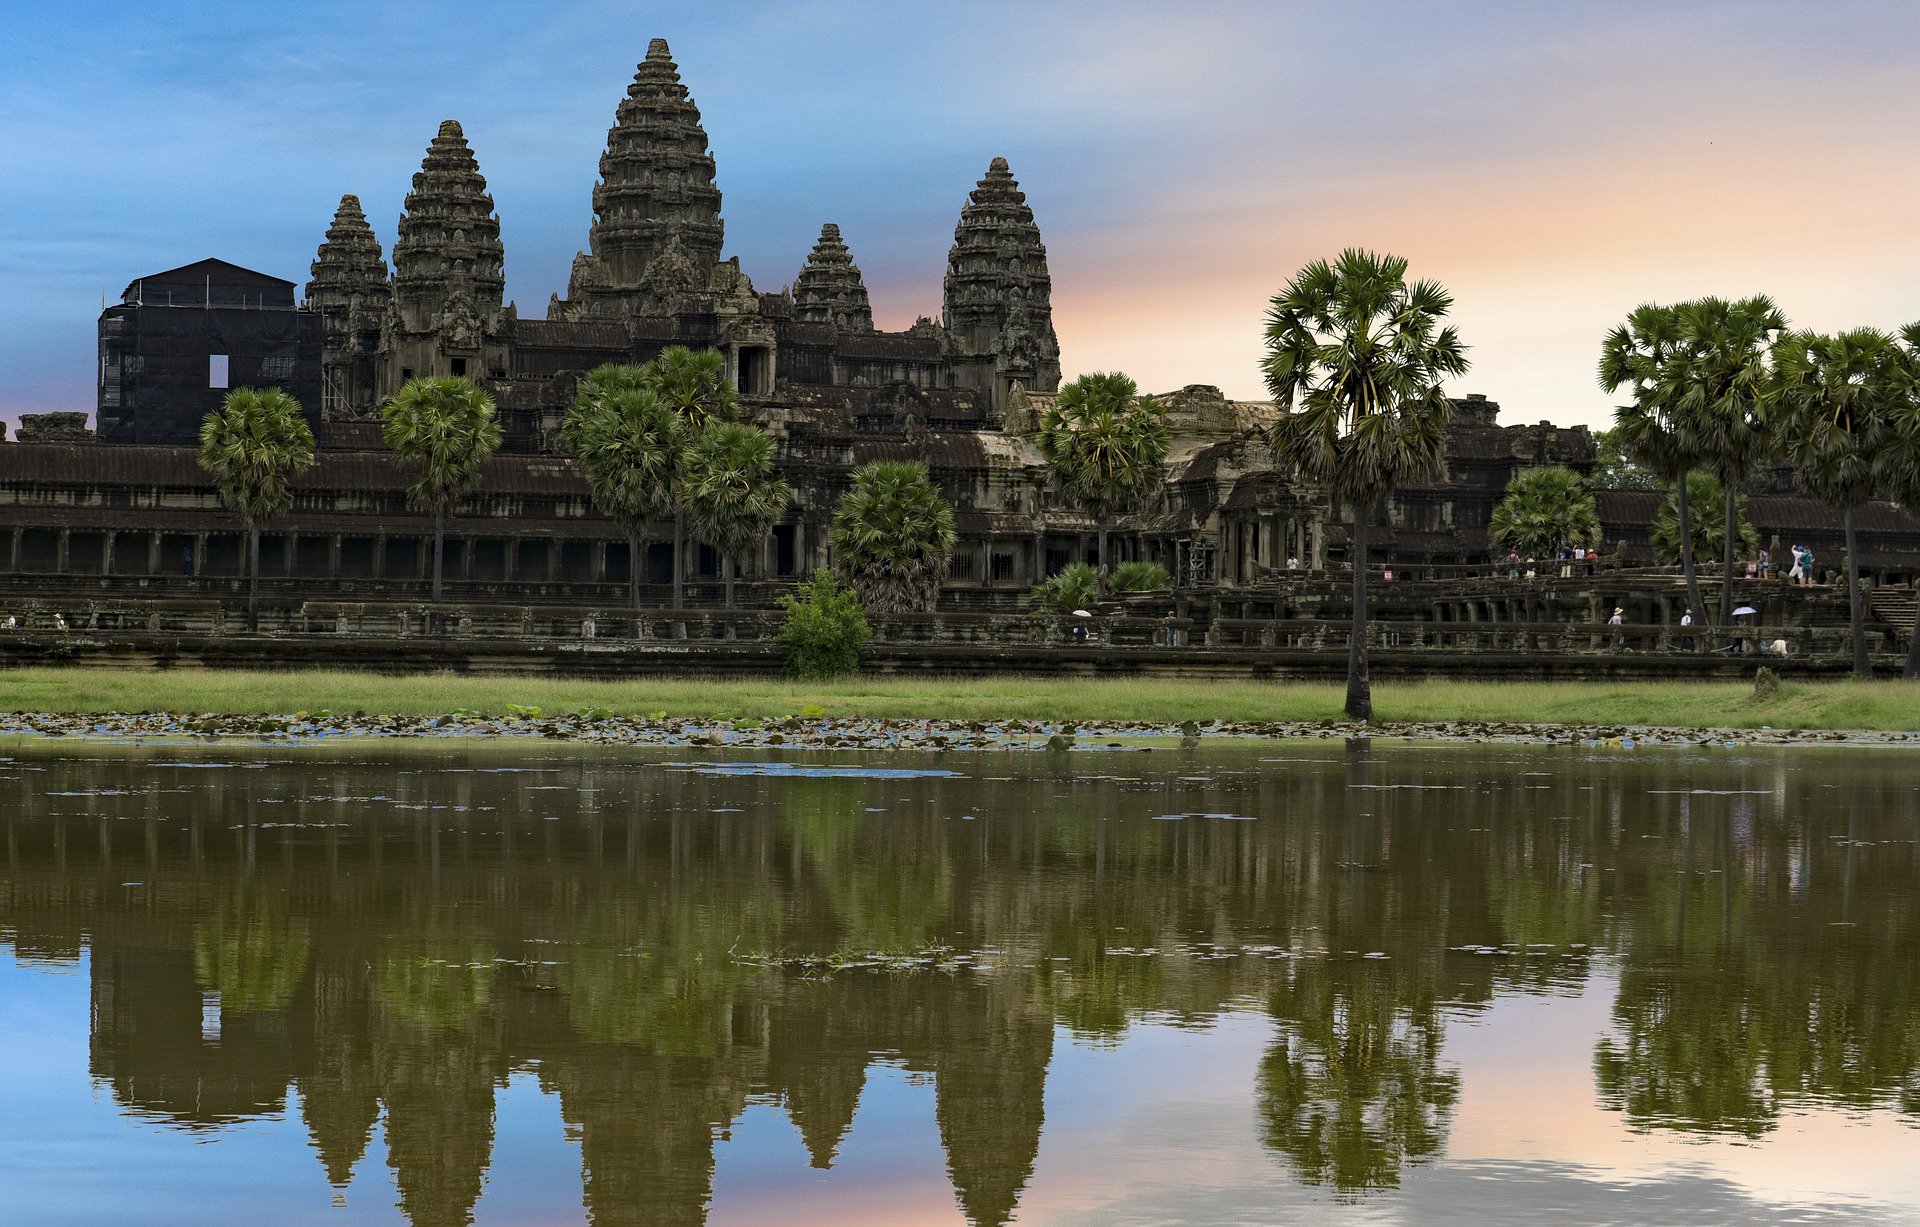 Angkor Wat temples - Siem Reap, Cambodia